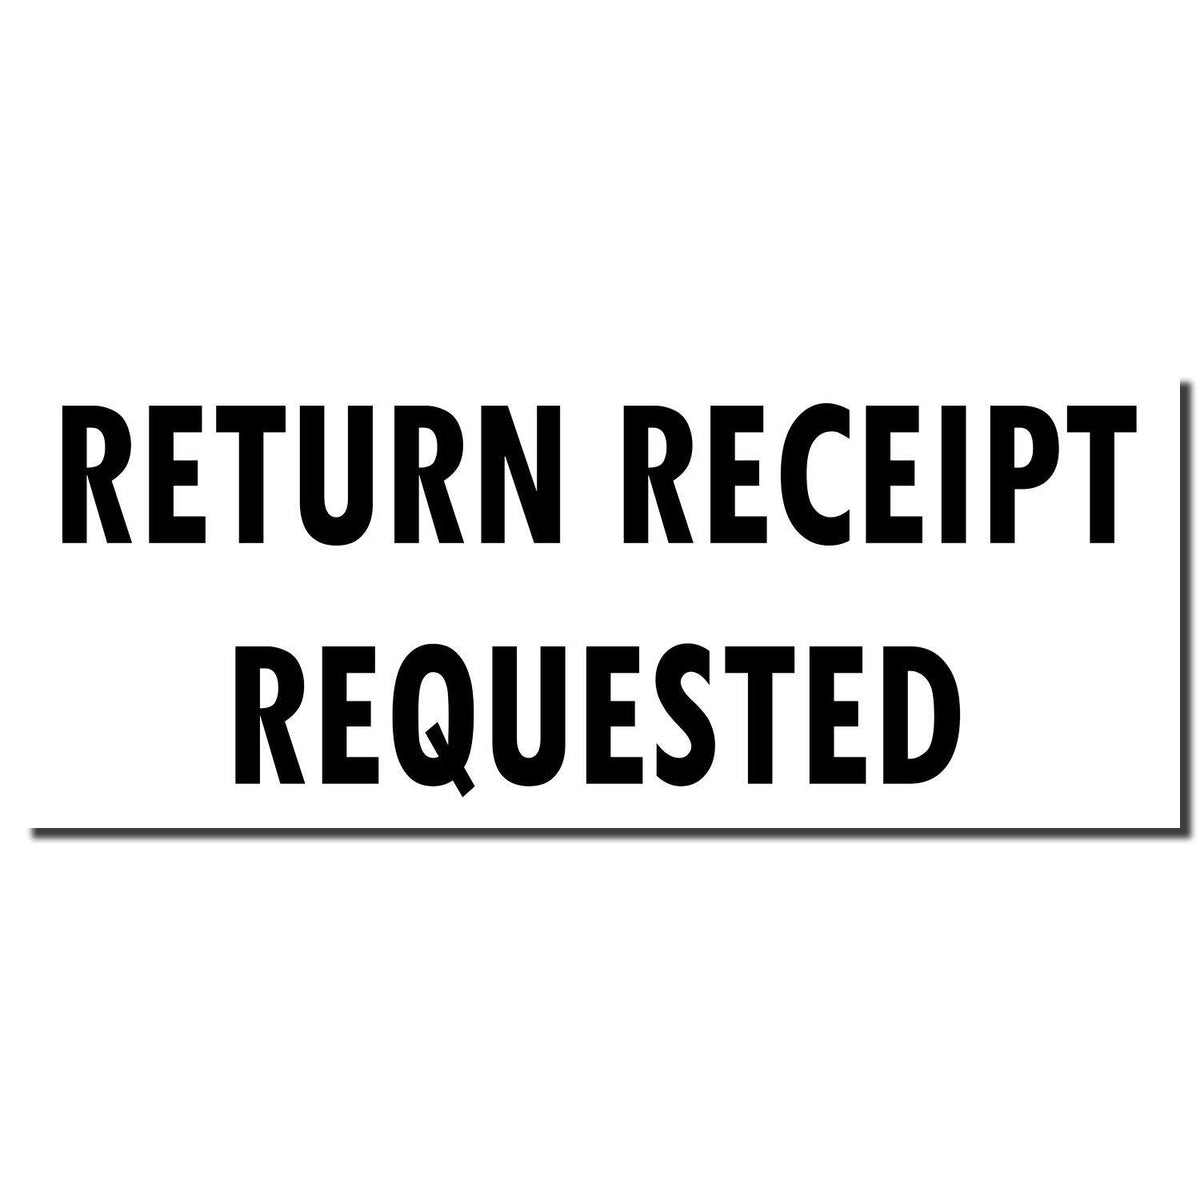 Enlarged Imprint Large Return Receipt Requested Rubber Stamp Sample